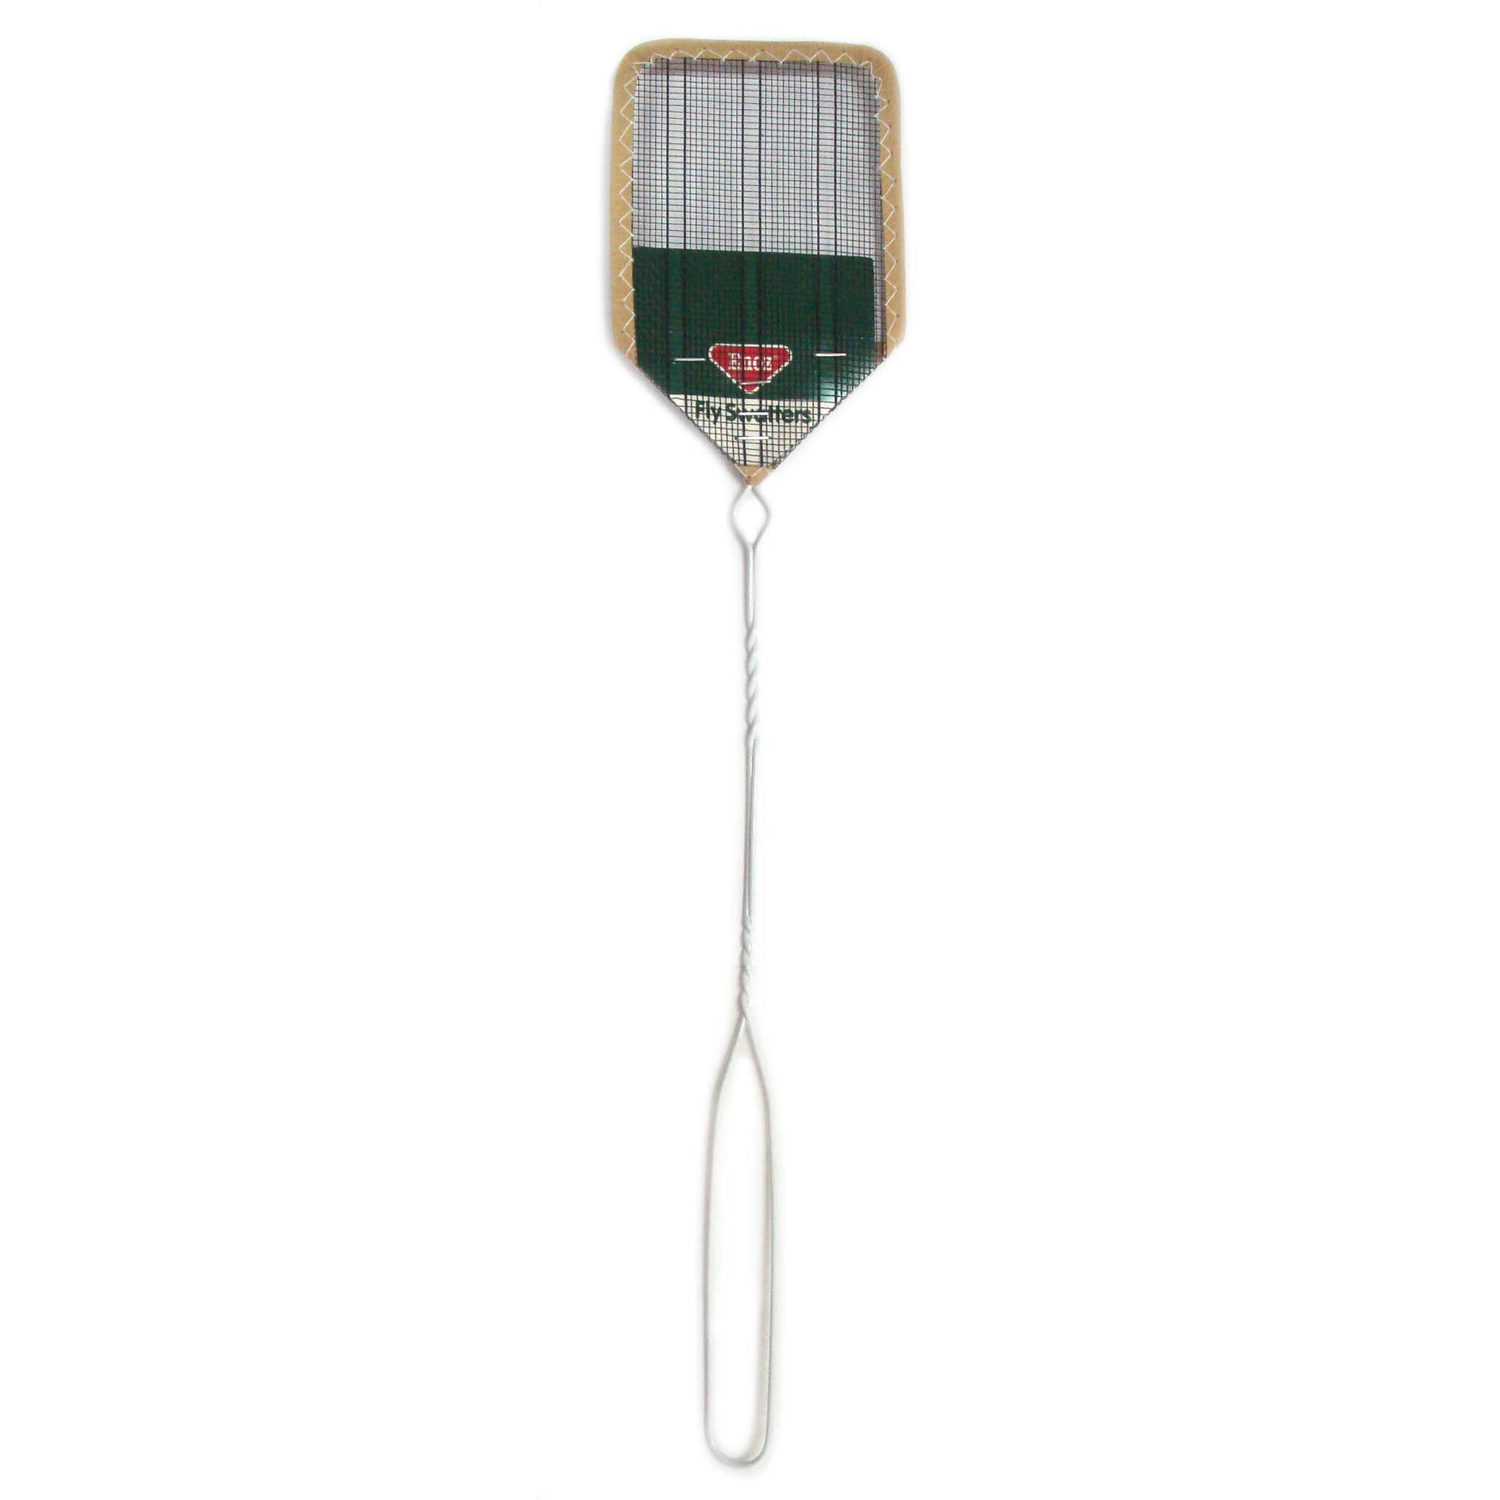 Enoz Assorted Aluminum Fly Swatter